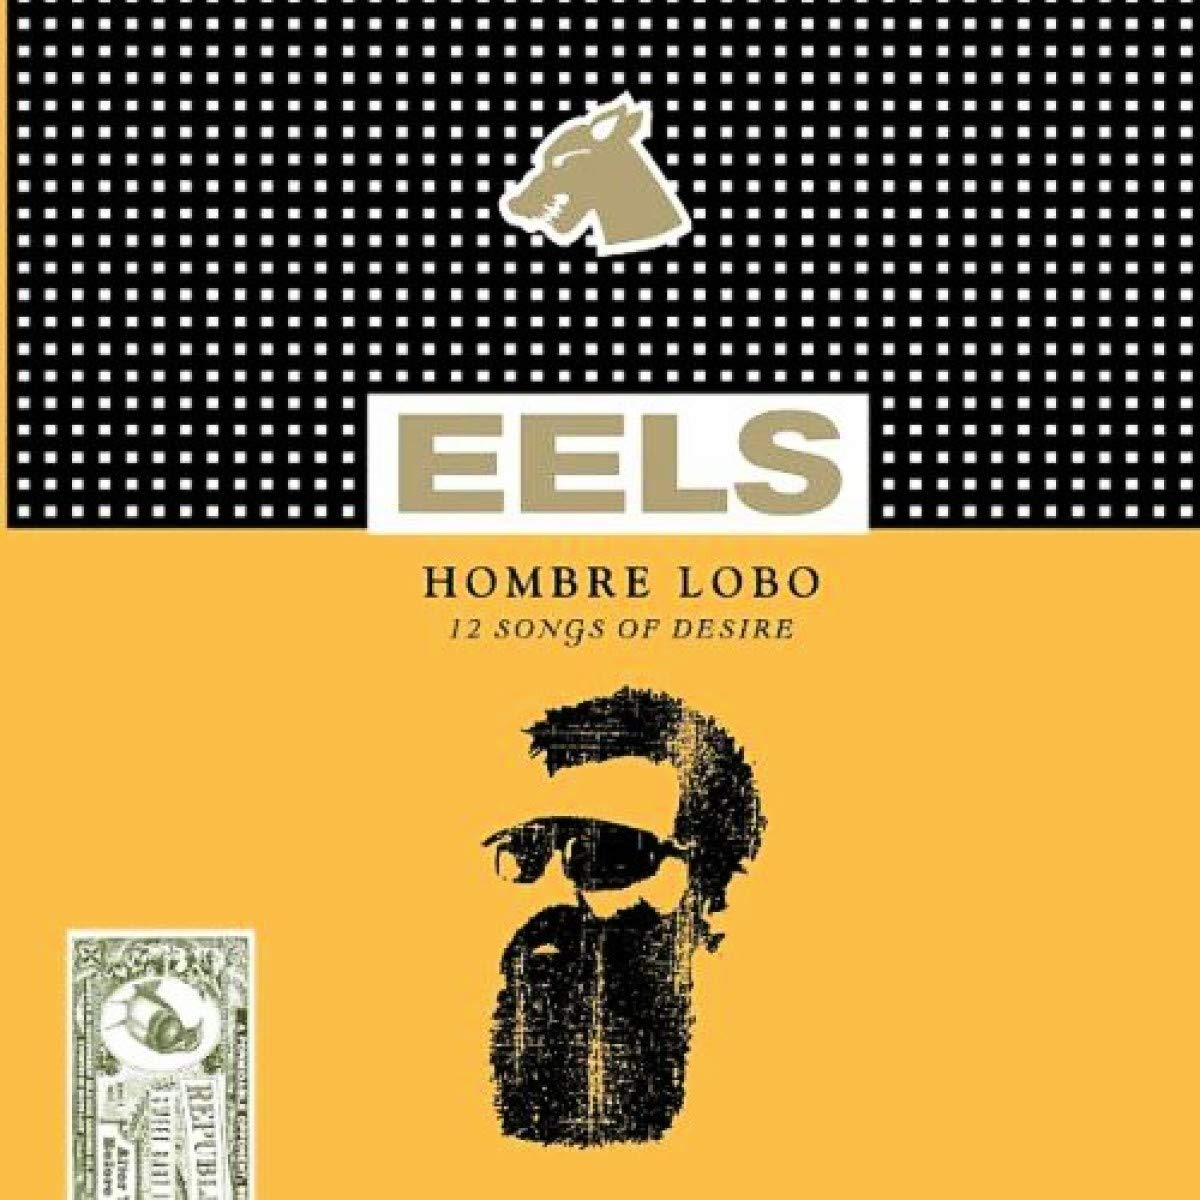 Eels "Hombre Lobo" LP